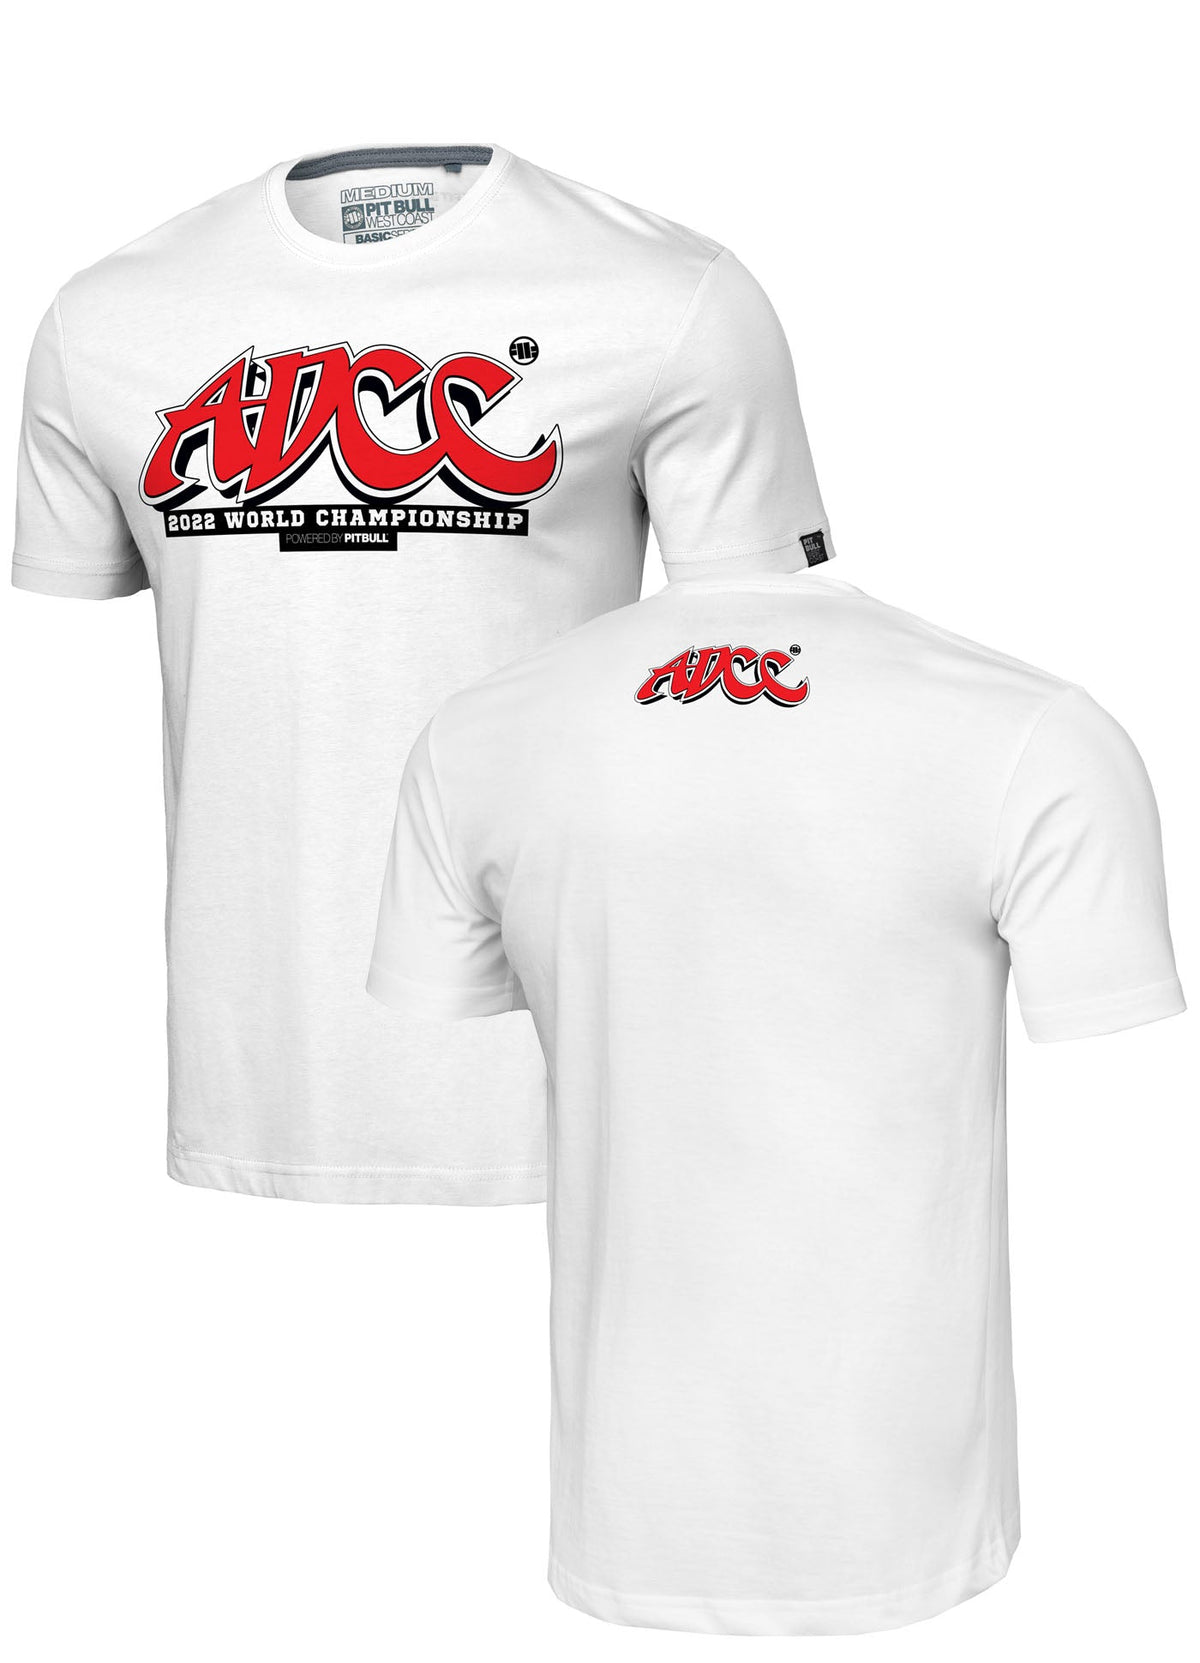 ADCC CHAMPIONSHIP 2022 BASIC White T-shirt